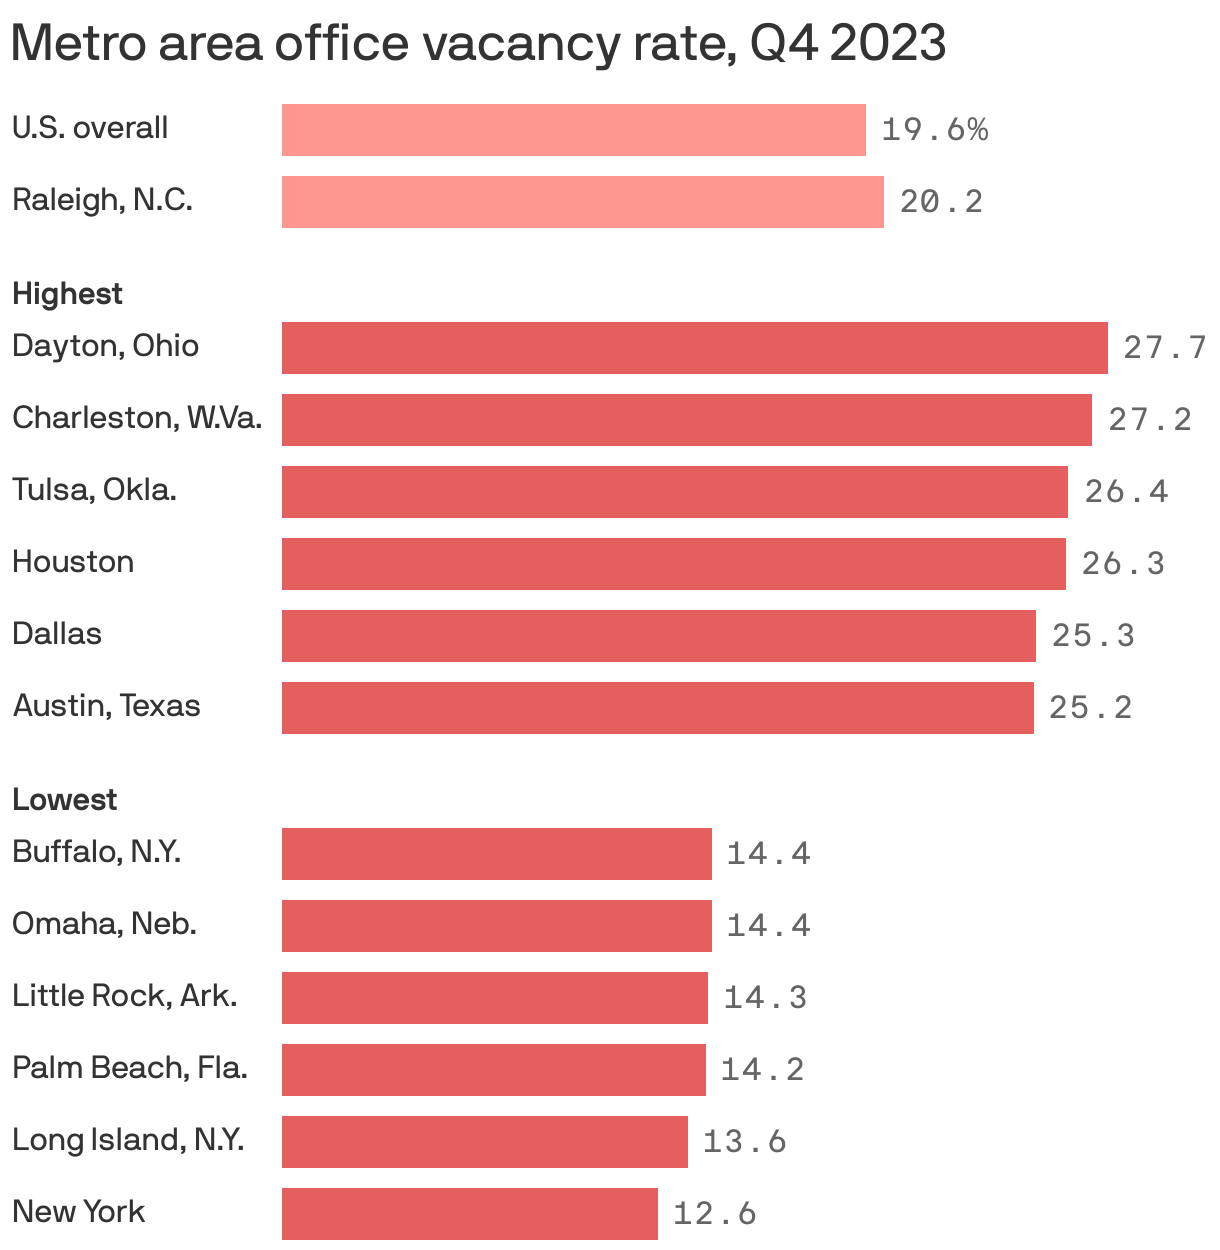 Metro area office vacancy rate, Q4 2023